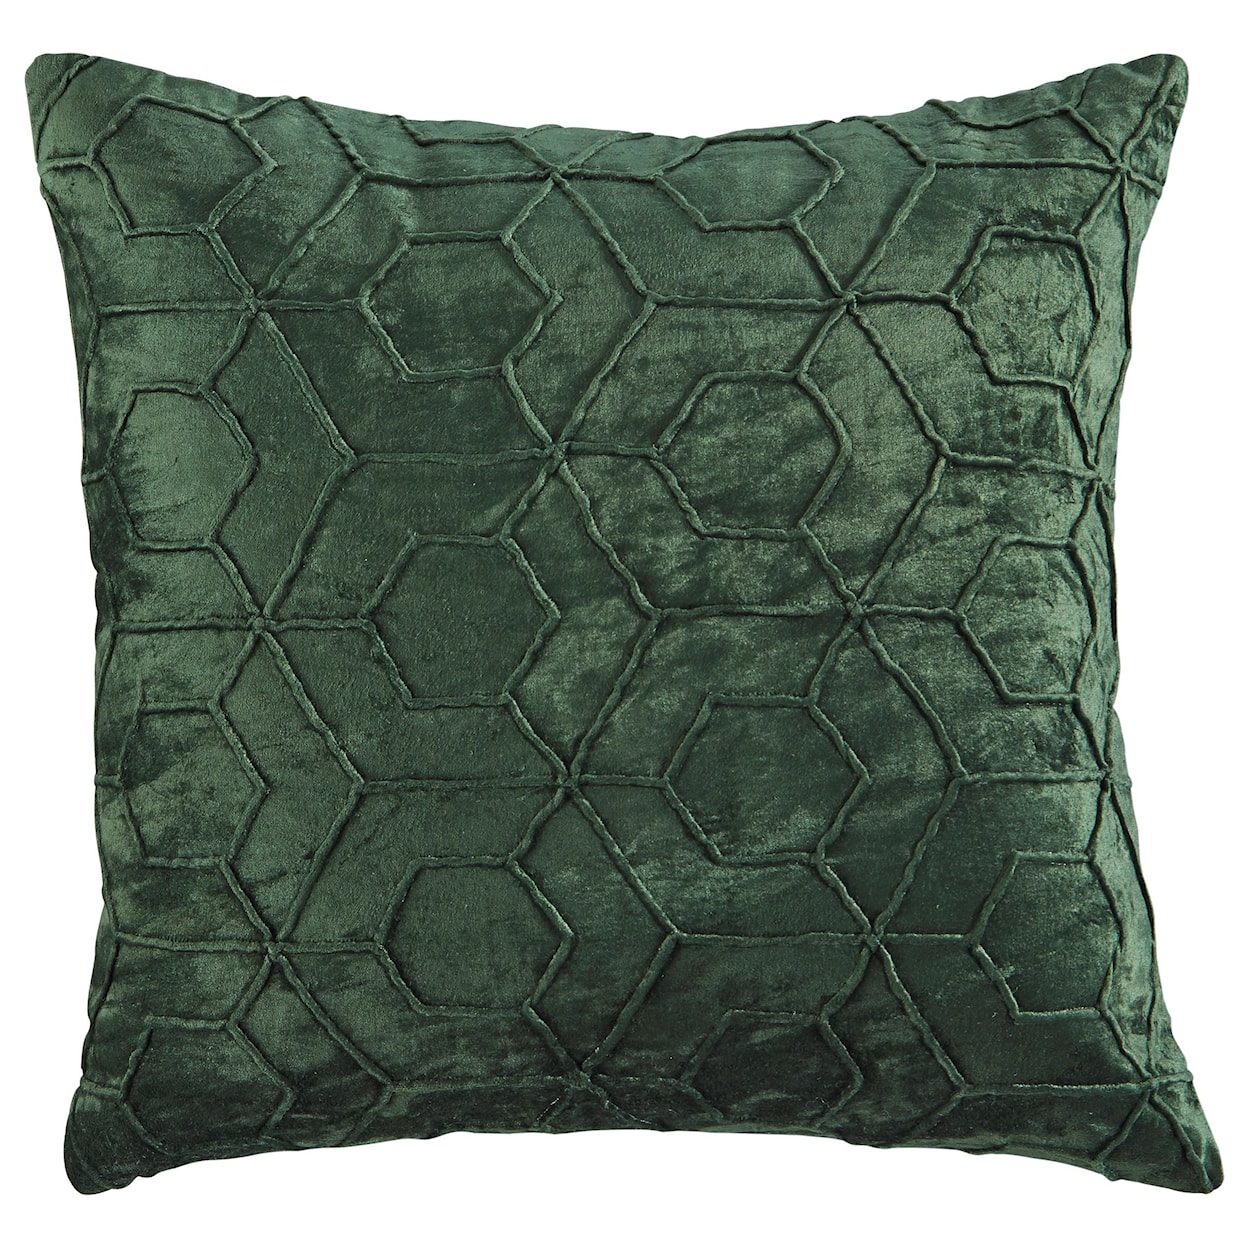 Ashley Furniture Signature Design Ditman Ditman Emerald Pillow